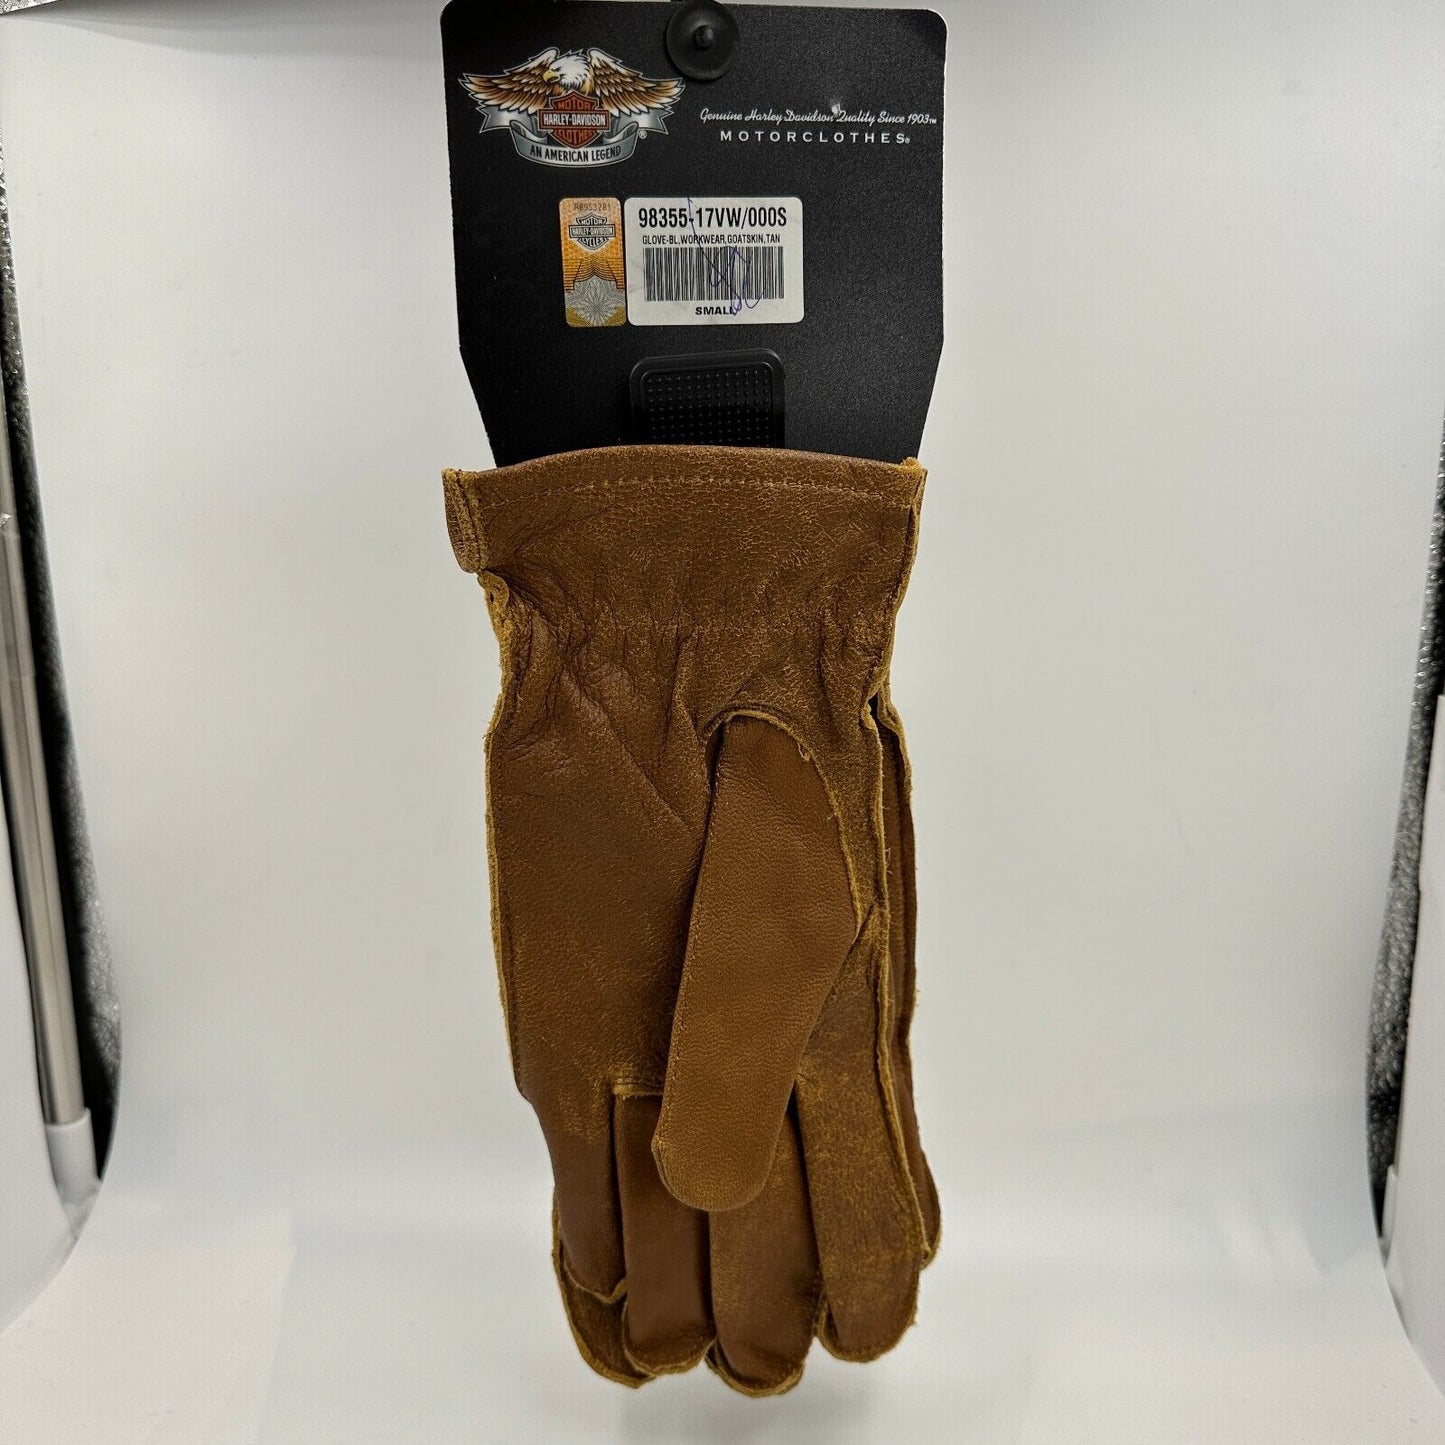 Harley-Davidson Women's Skin Gloves Work-Wear Inspired Goat Tan 98355-17VW Tag